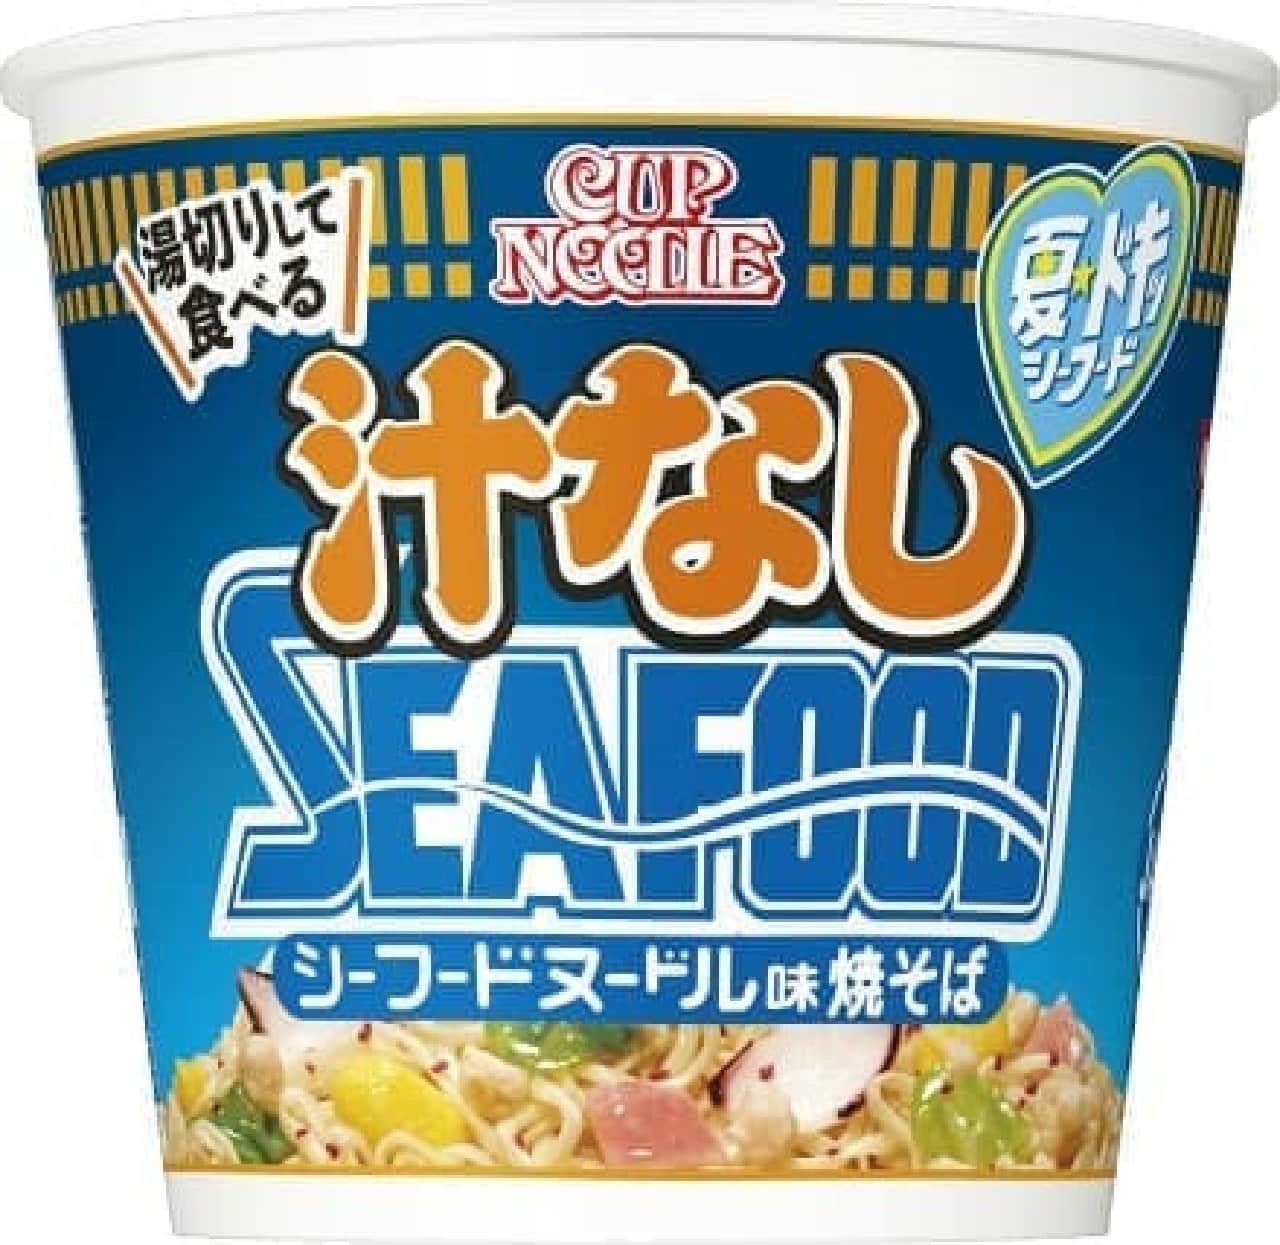 Nissin Foods "Cup Noodle Juiceless Seafood"